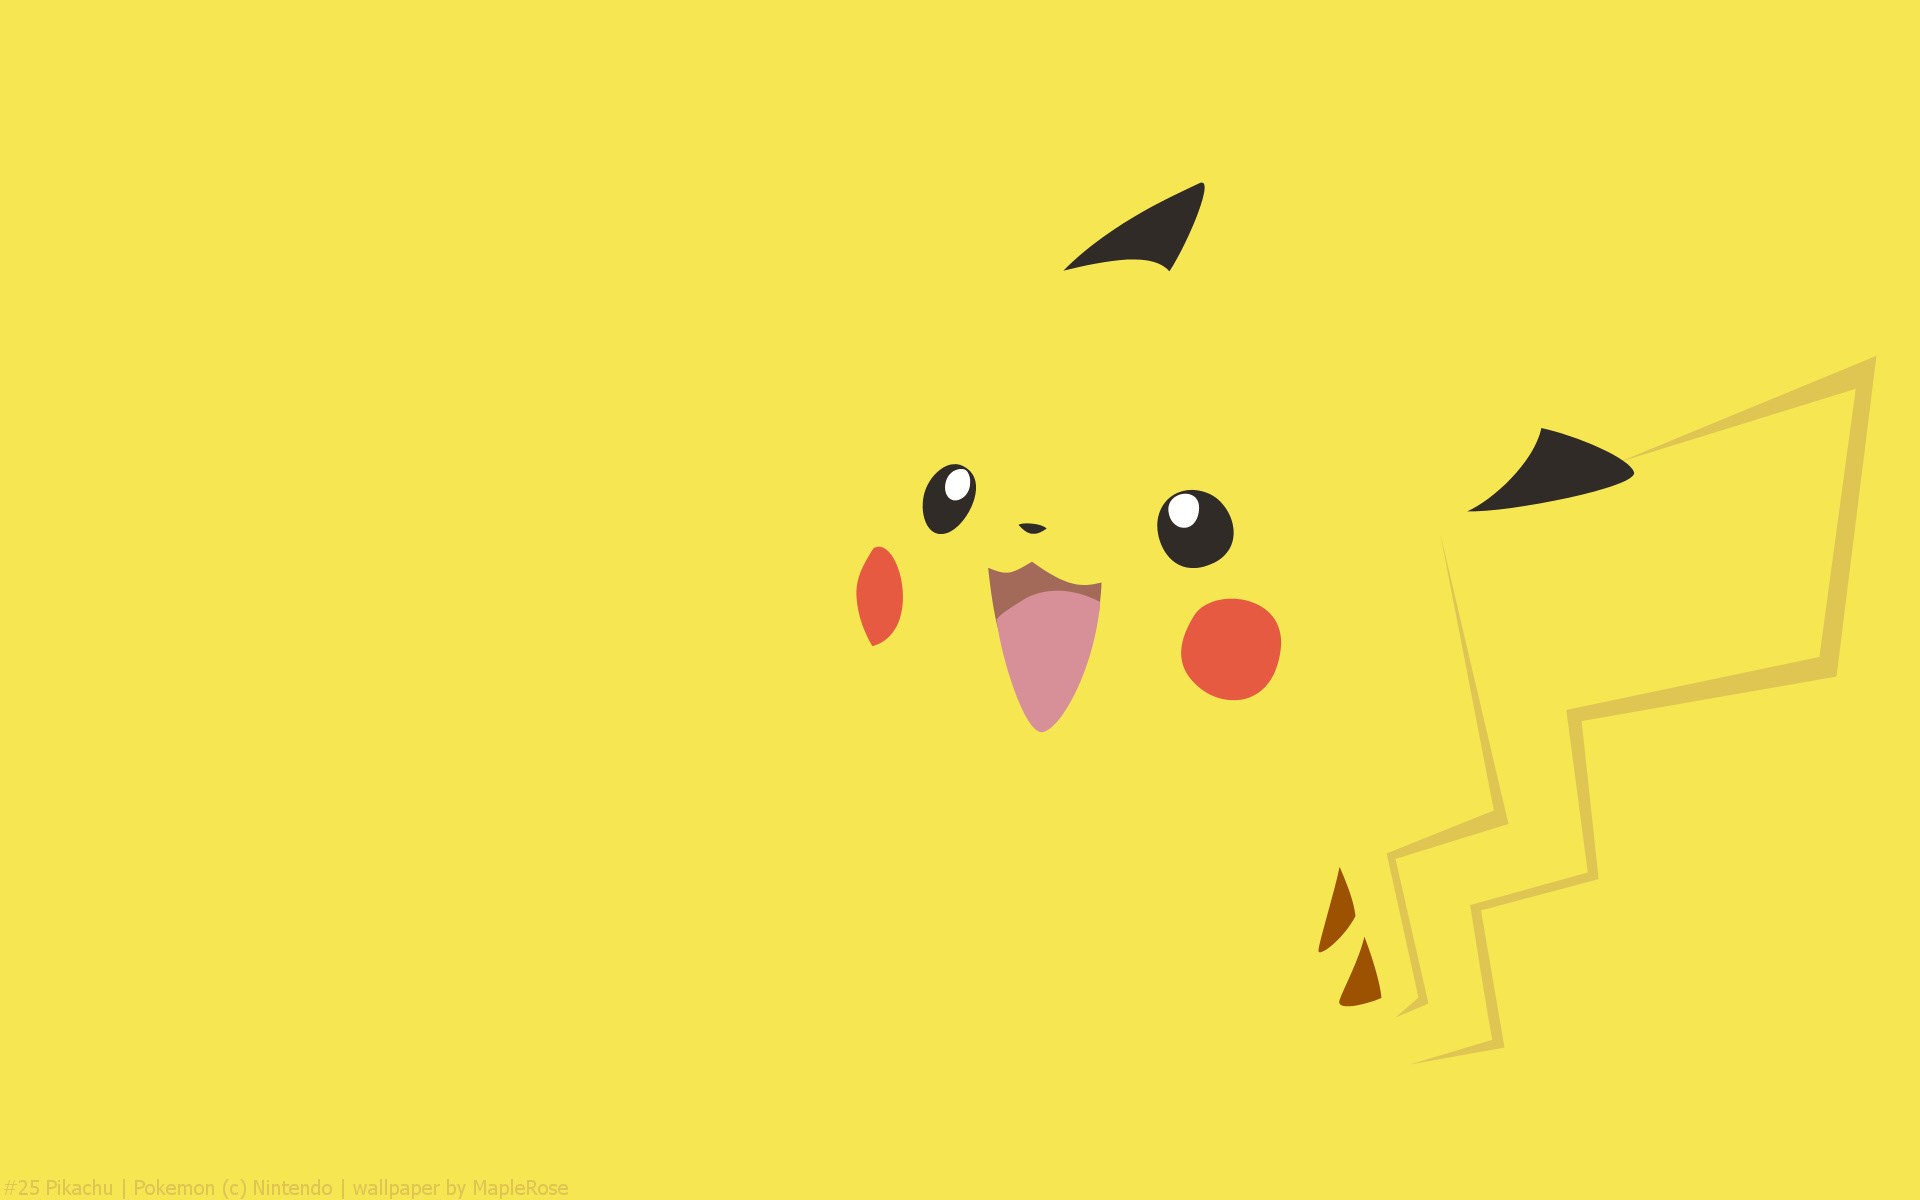 Pikachu Supreme Wallpapers - Wallpaper Cave  Pikachu wallpaper iphone, Pikachu  wallpaper, Supreme wallpaper